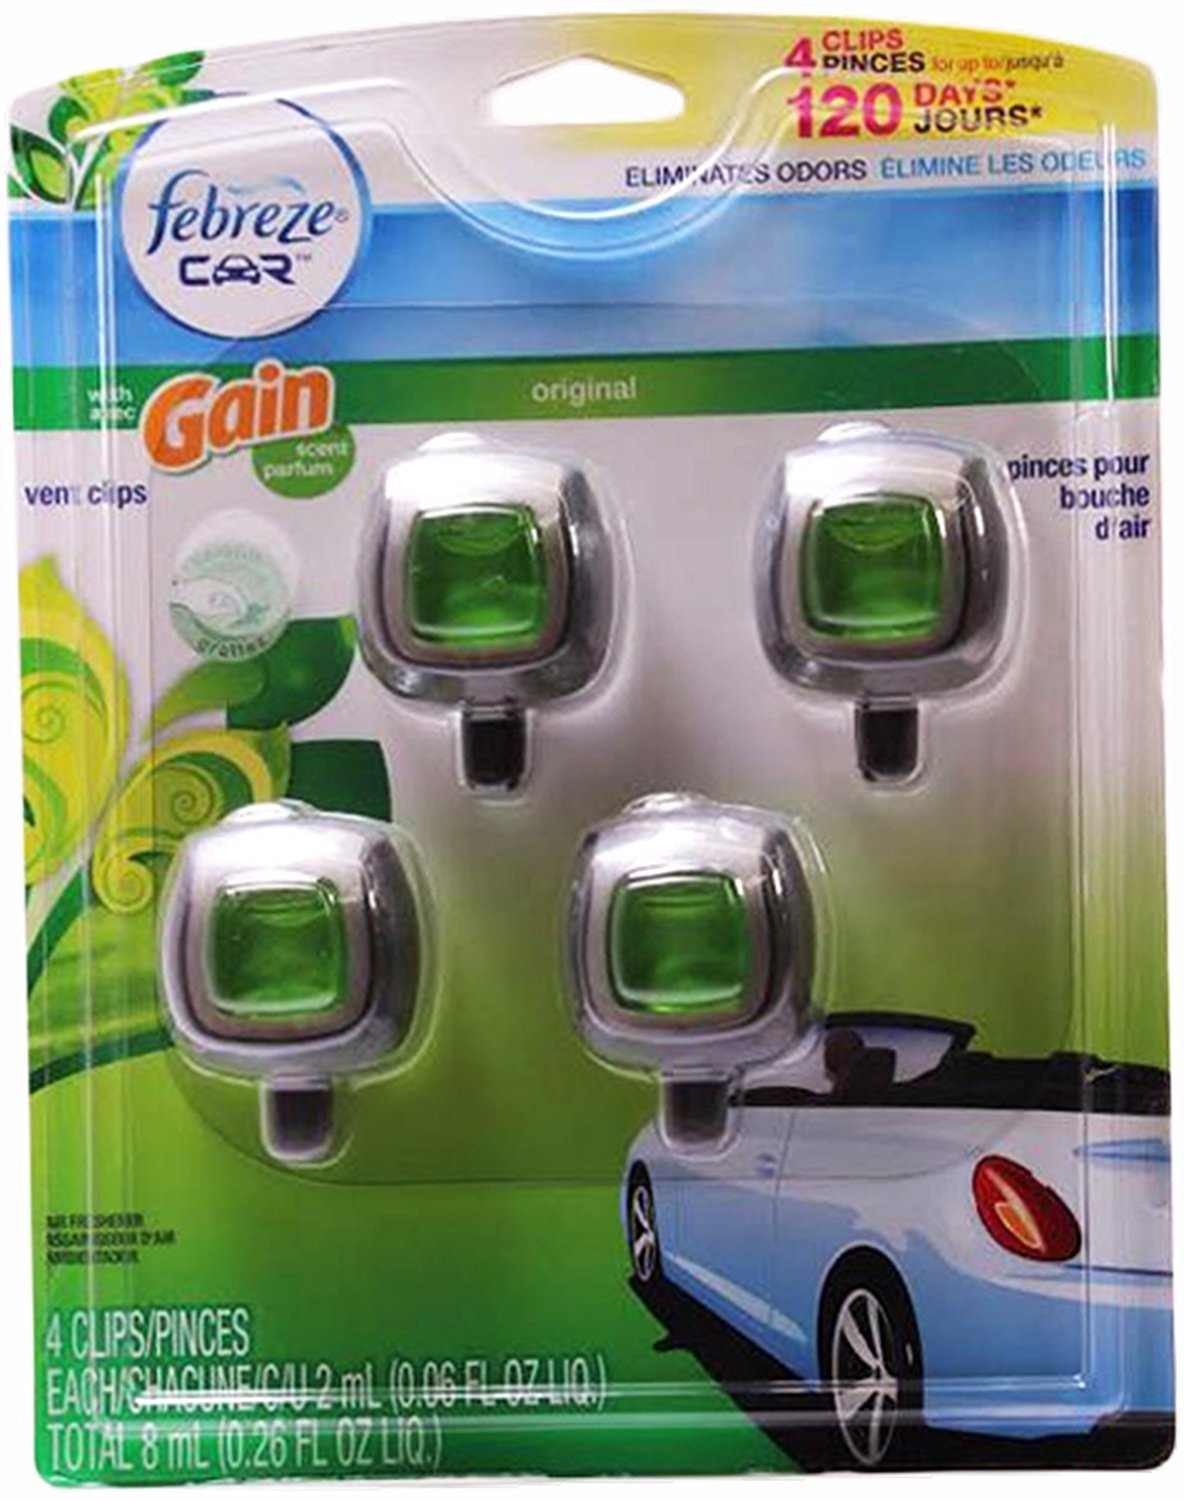 Febreze Car Vent Clip Auto, Home Office AC Air Freshener & Odor Eliminator,  With Gain Original - 4 Pieces by GOSO Direct